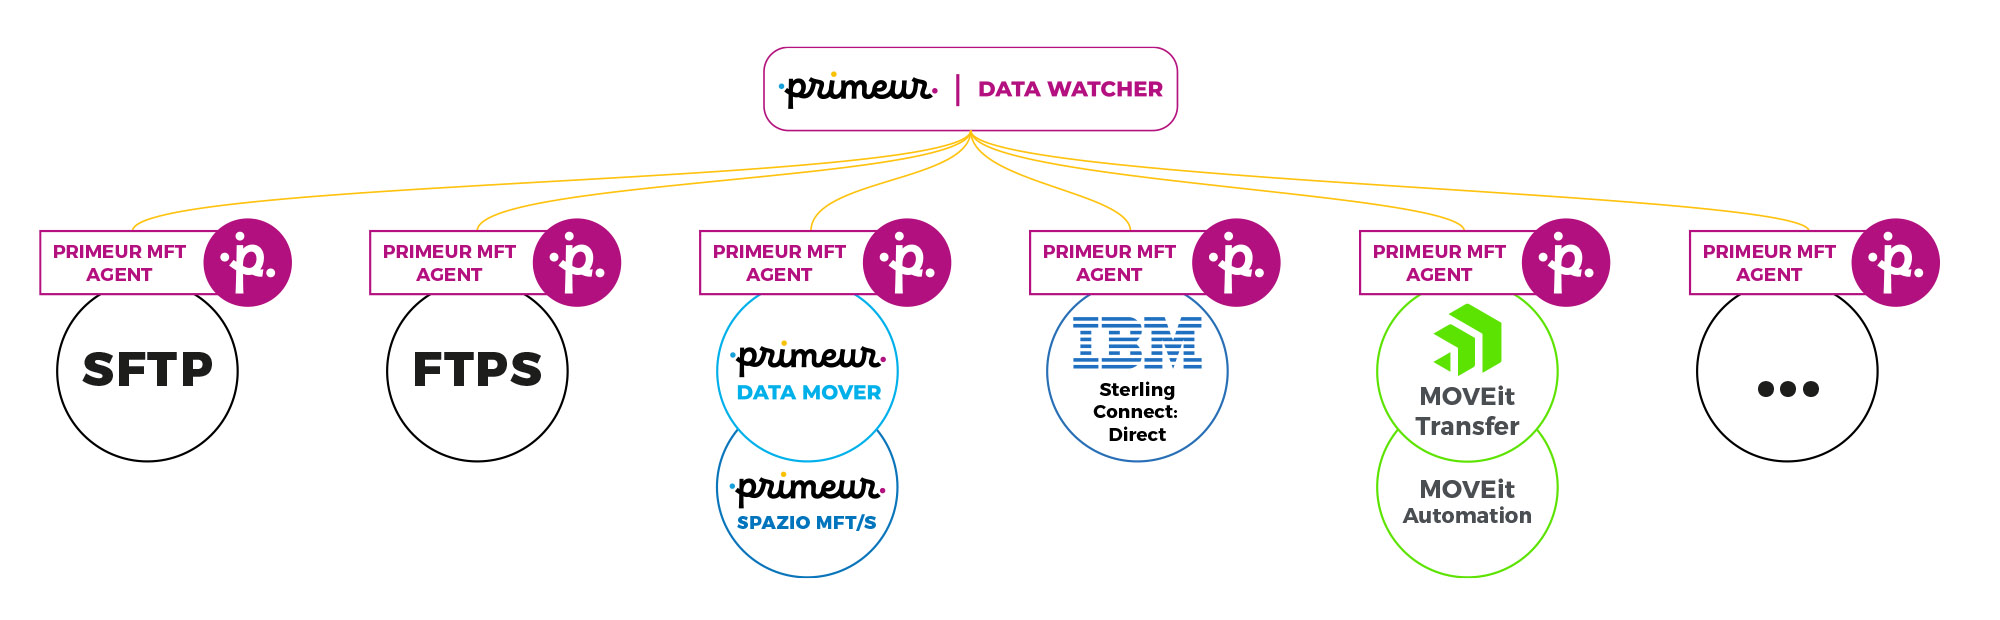 Primeur Data Watcher - Agents